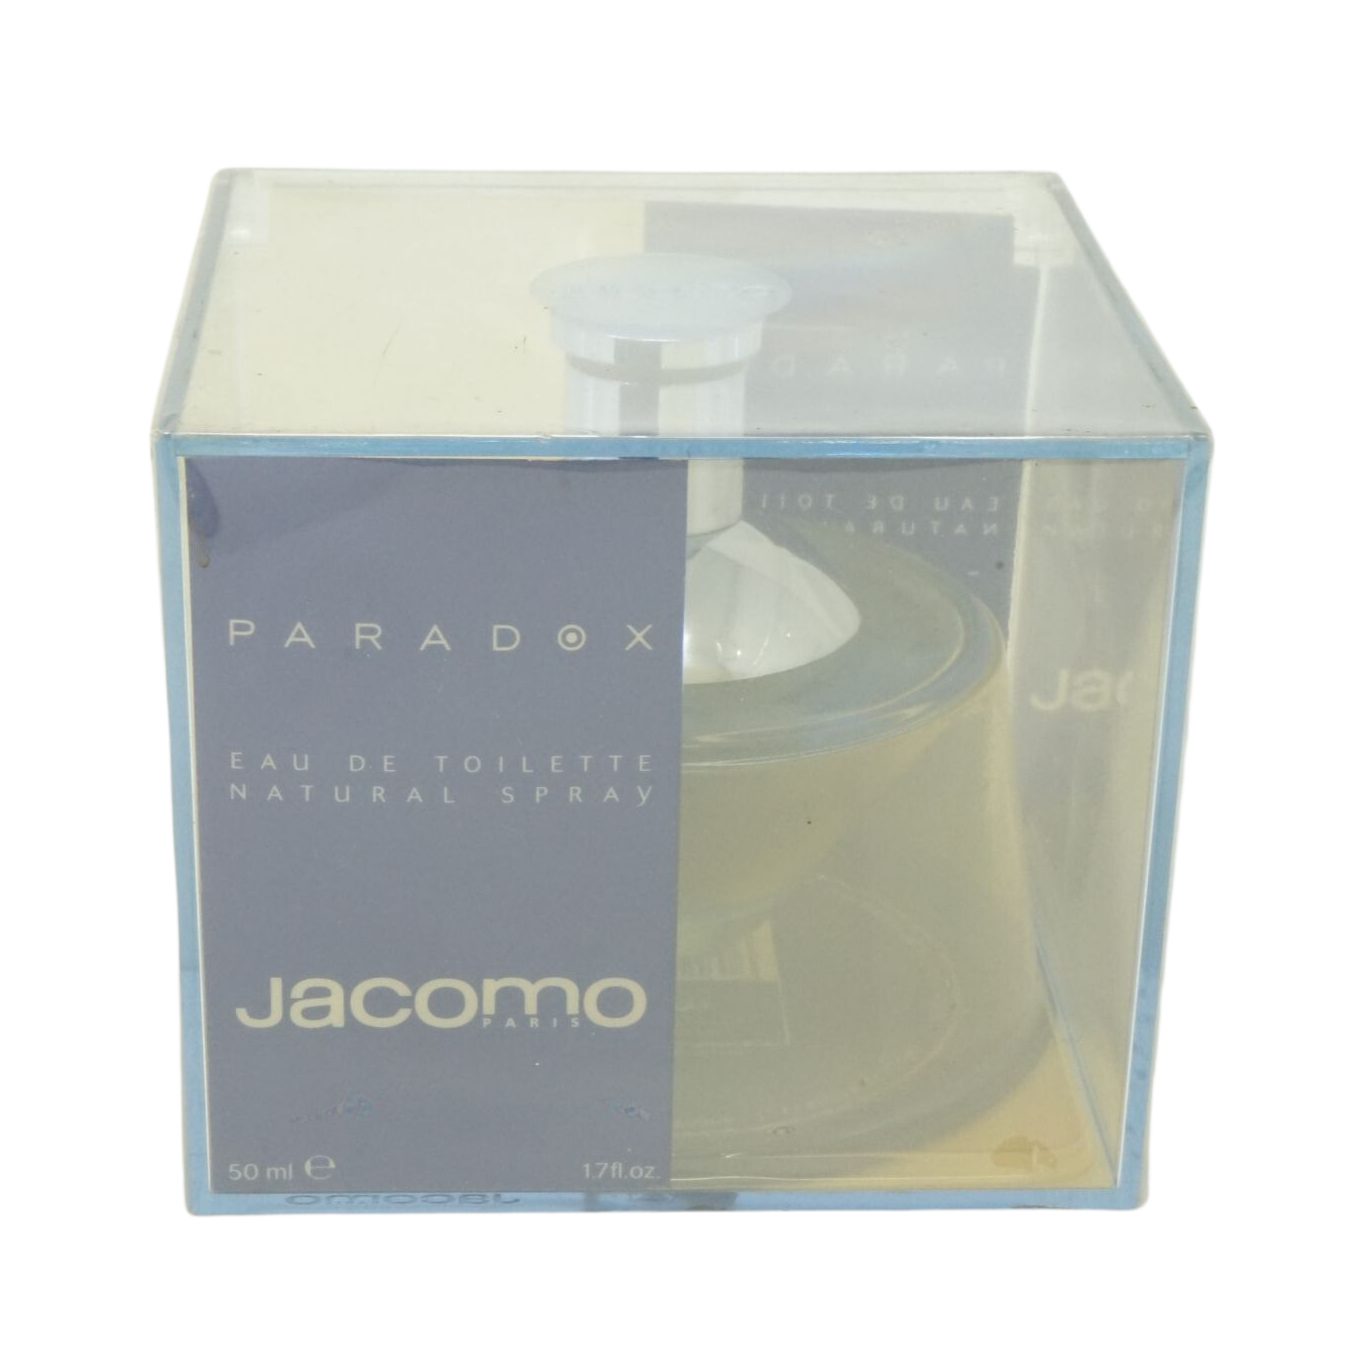 Paradox Toilette Jacomo de Toilette Spray de Eau 50ml Eau Jacomo